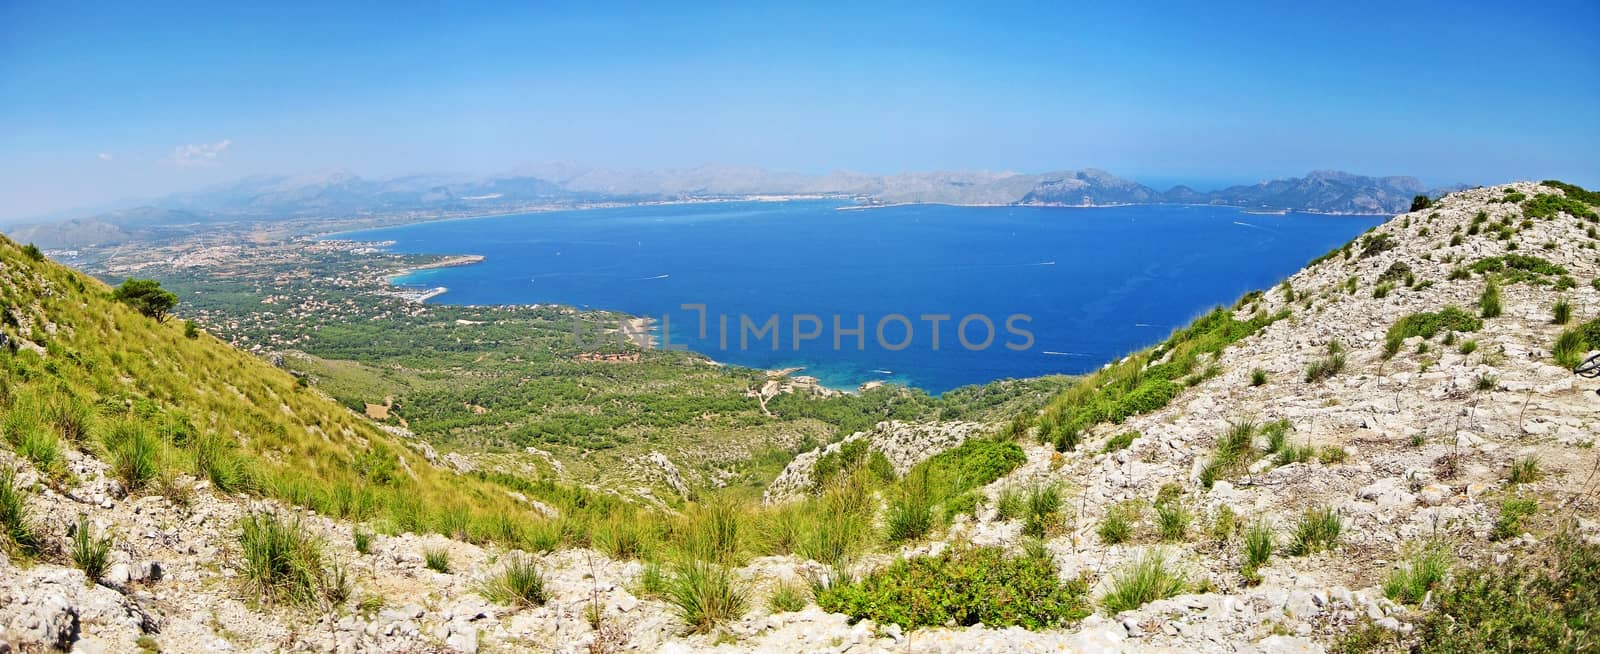 Bay of pollenca, Formentor peninsula - north coast of Majorca by aldorado